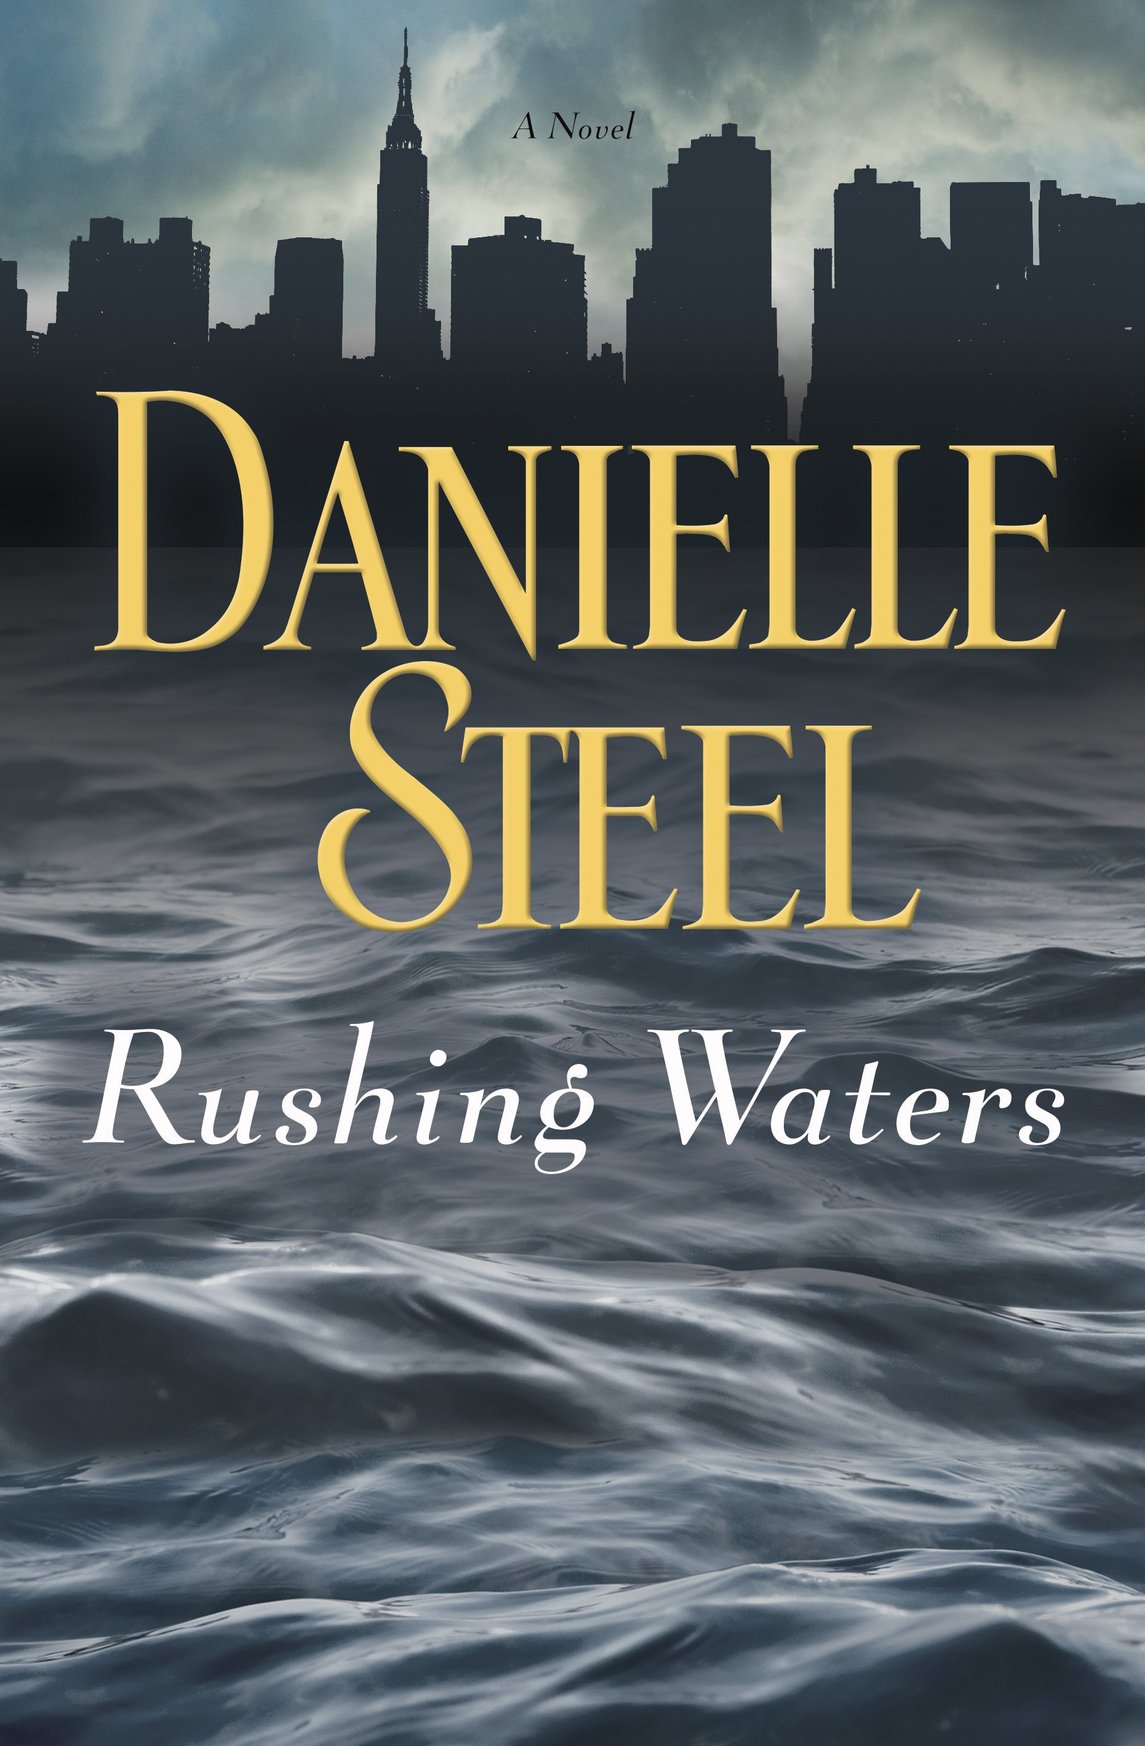 Rushing Waters (2016) by Danielle Steel